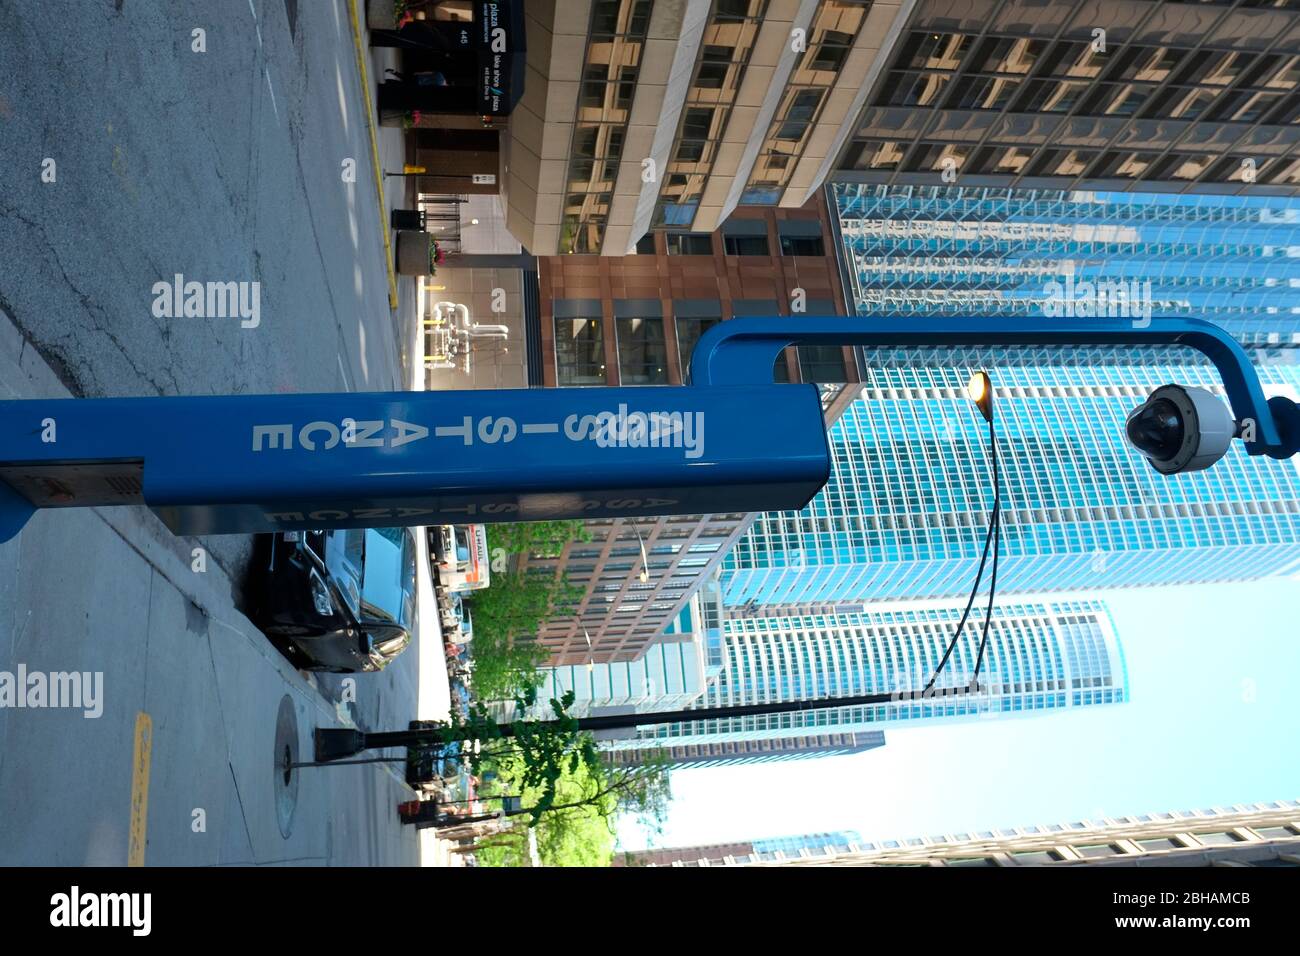 Notfallkommunikationsgerät mit Kamera. Downtown Chicago, Abb. Stockfoto